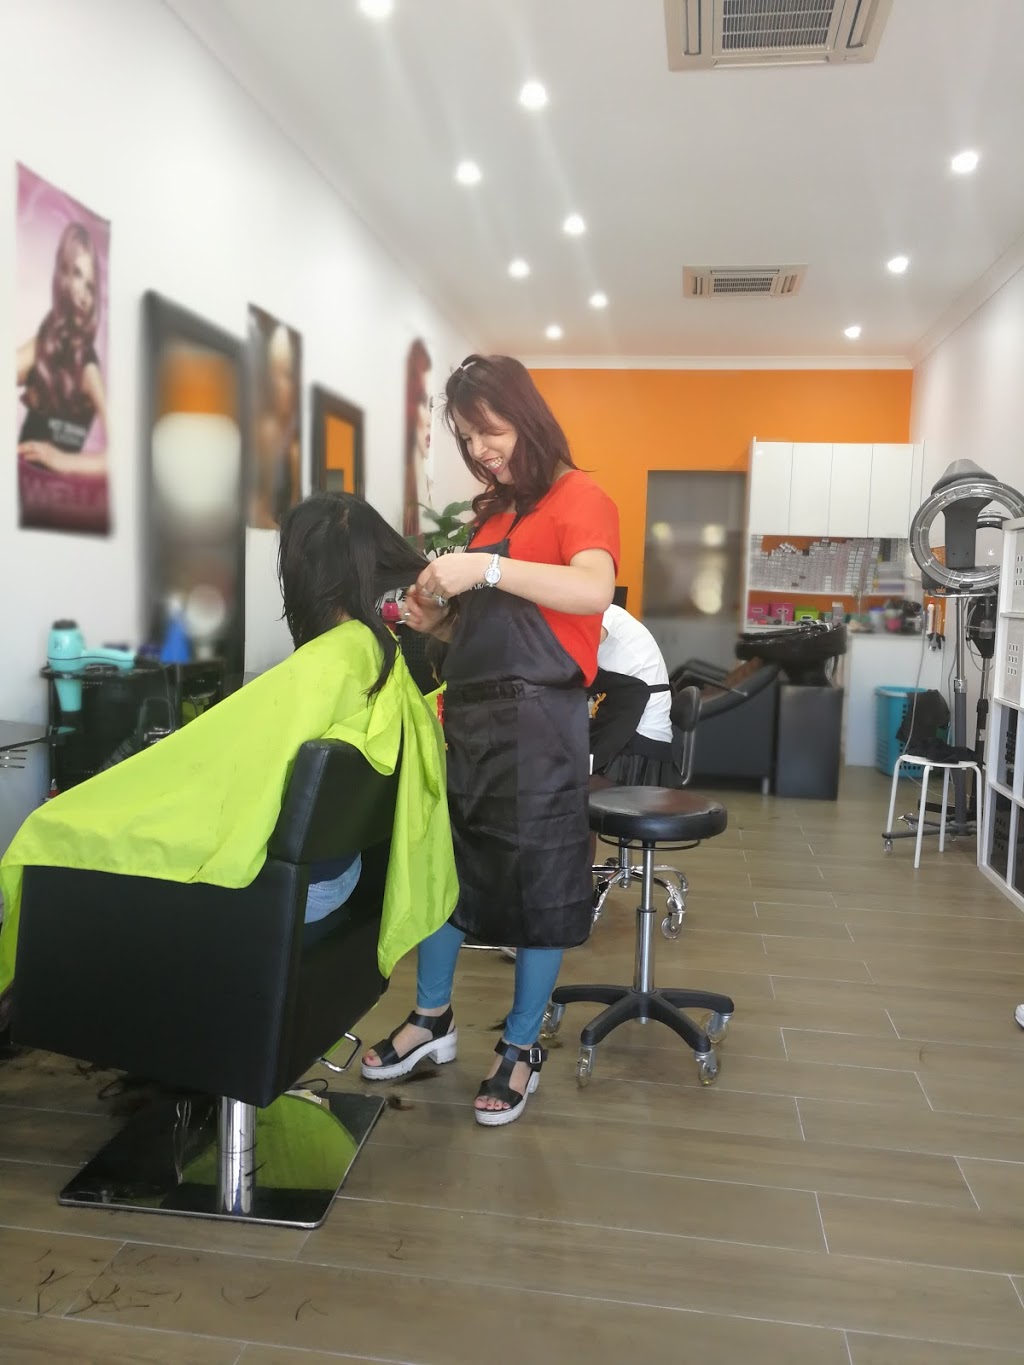 New Feeling Hair Salon | hair care | 64 Langford Ave, Langford WA 6147, Australia | 0423731368 OR +61 423 731 368